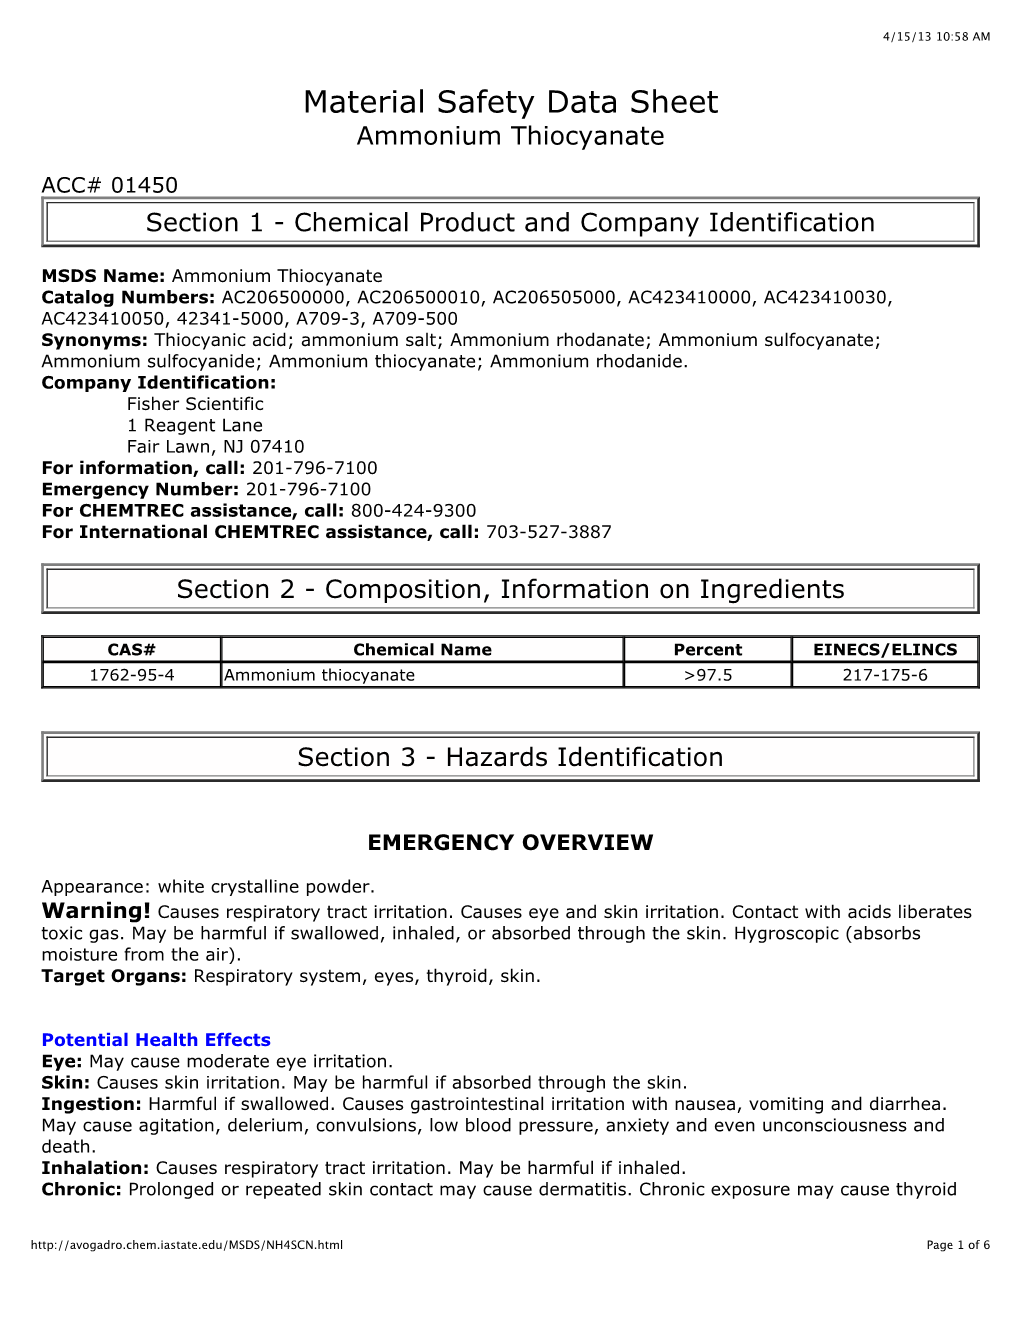 Material Safety Data Sheet Ammonium Thiocyanate